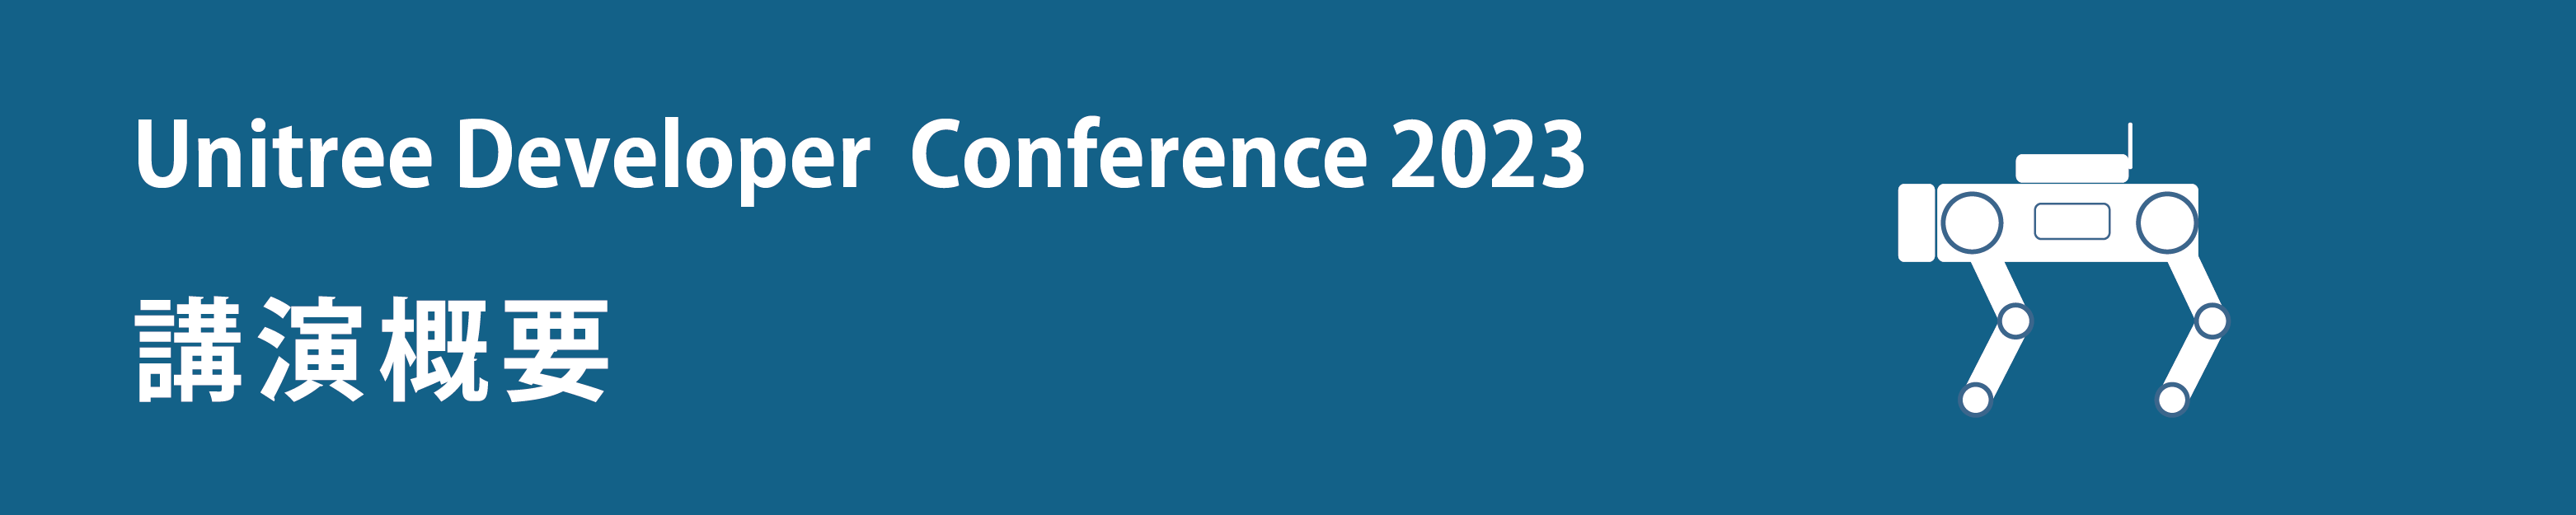 Unitree Developer Conference 2023講演概要のアイキャッチ画像